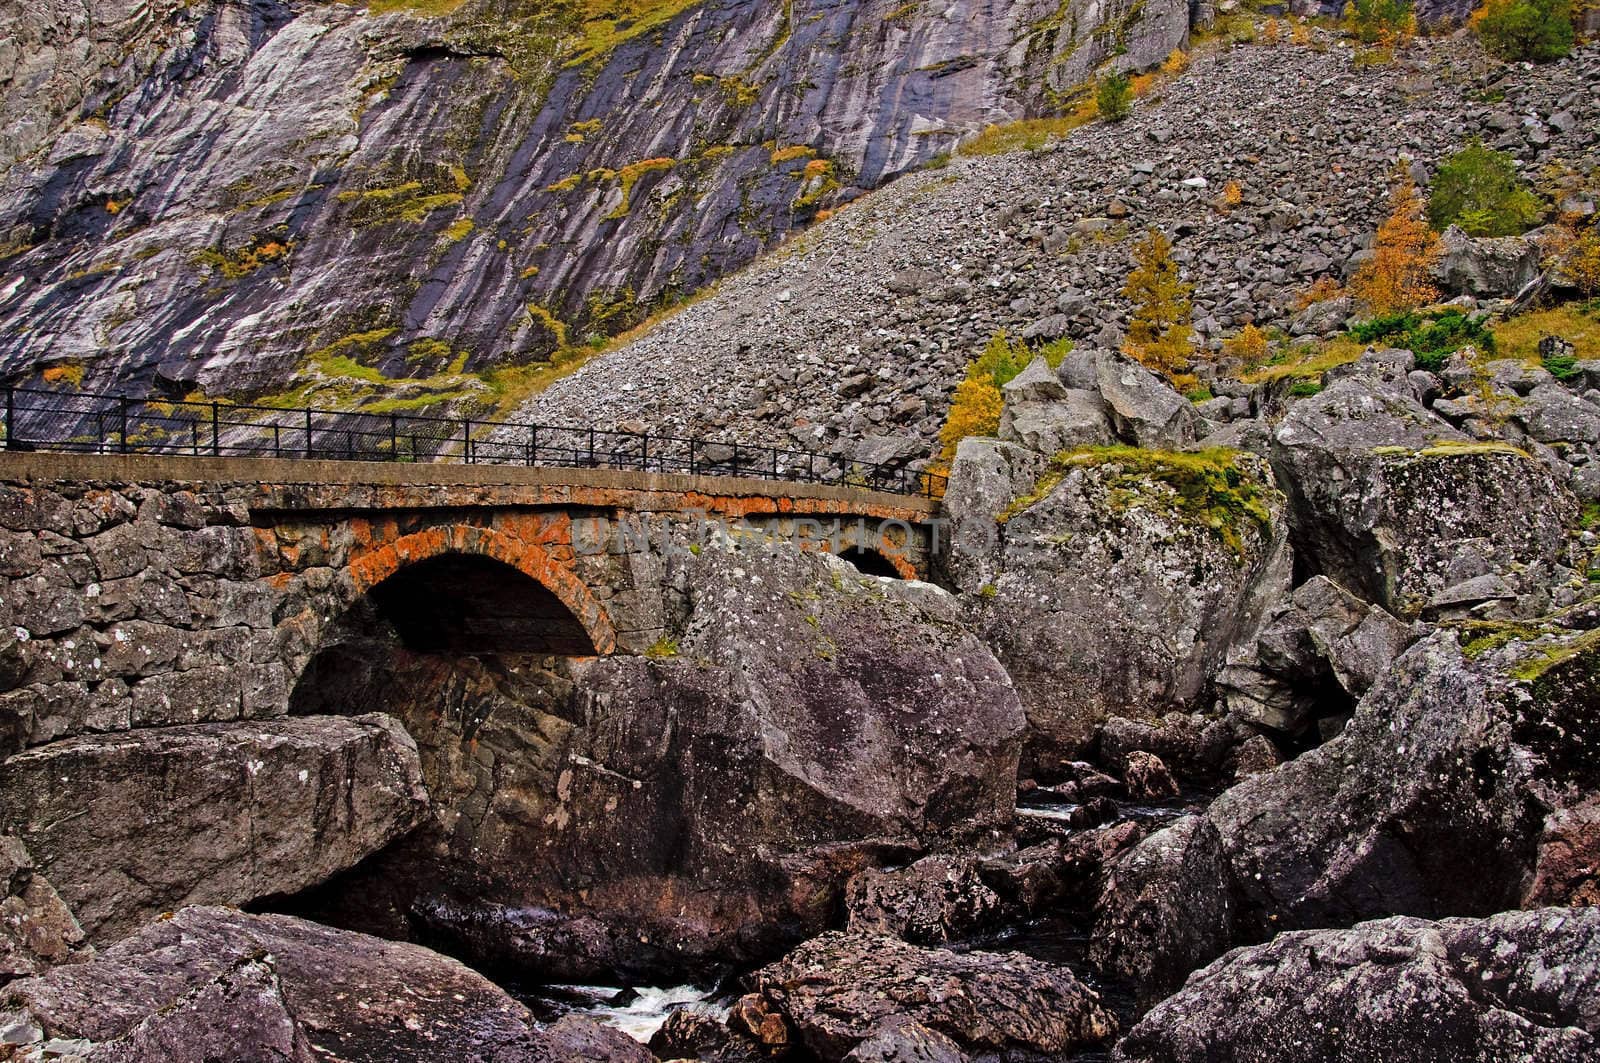 Stone bridge in a rocky valley by GryT